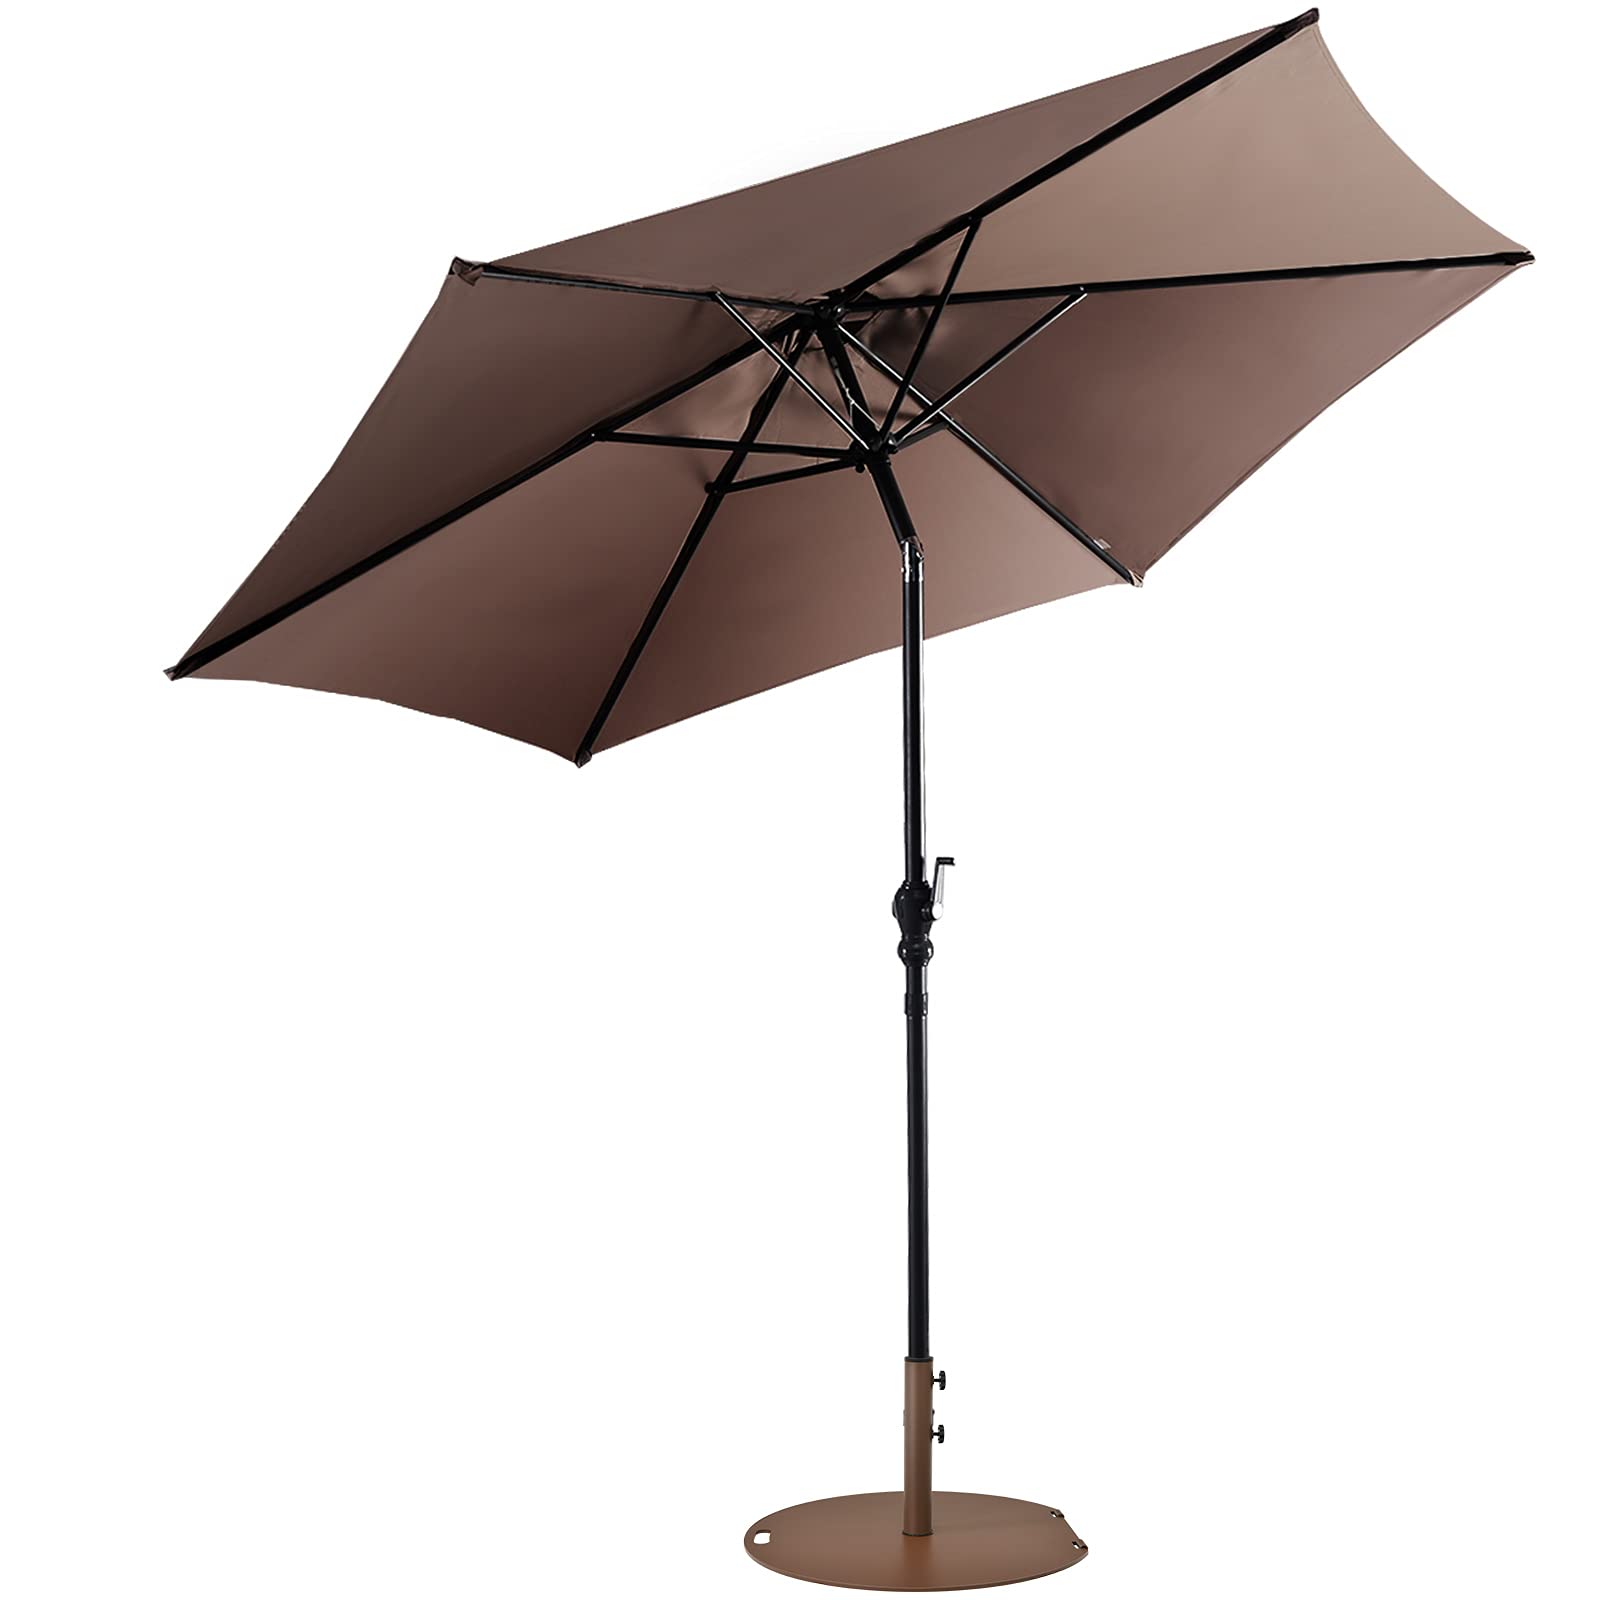 Giantex Patio Umbrella with Base Stand, 9ft Market Umbrella